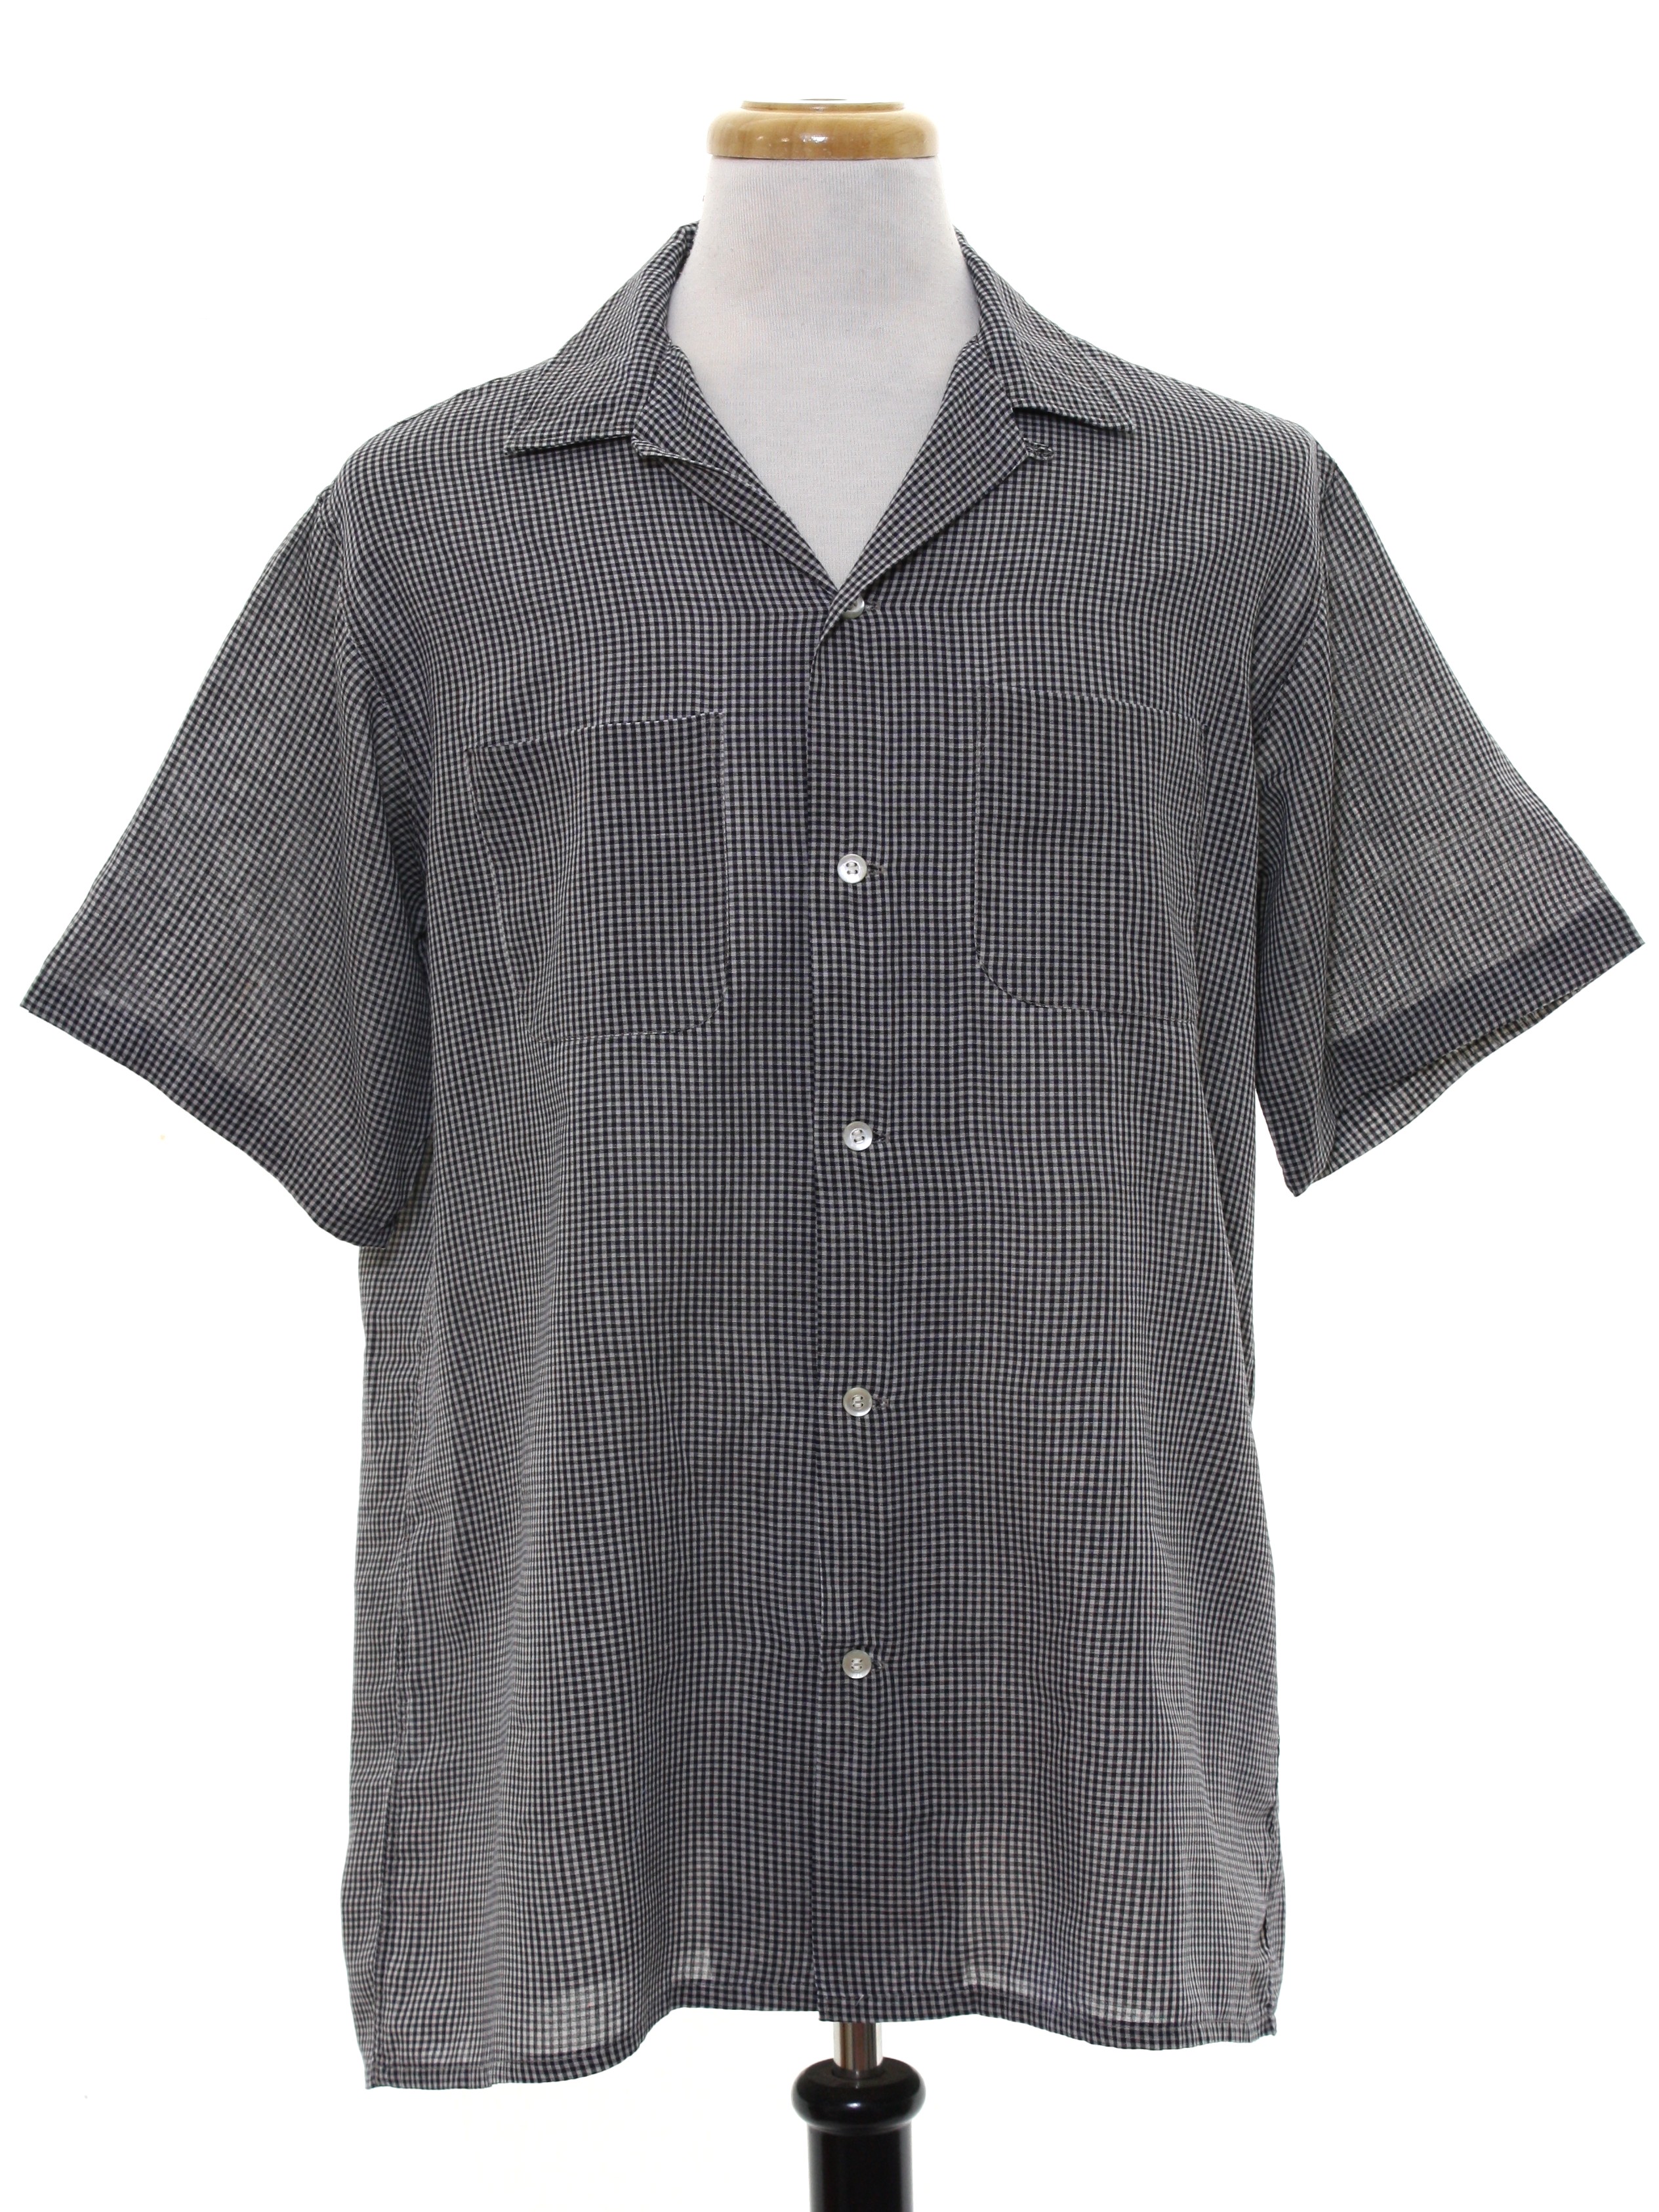 Vintage 1950's Shirt: Late 50s -Van Heusen Tallman- Mens white ...